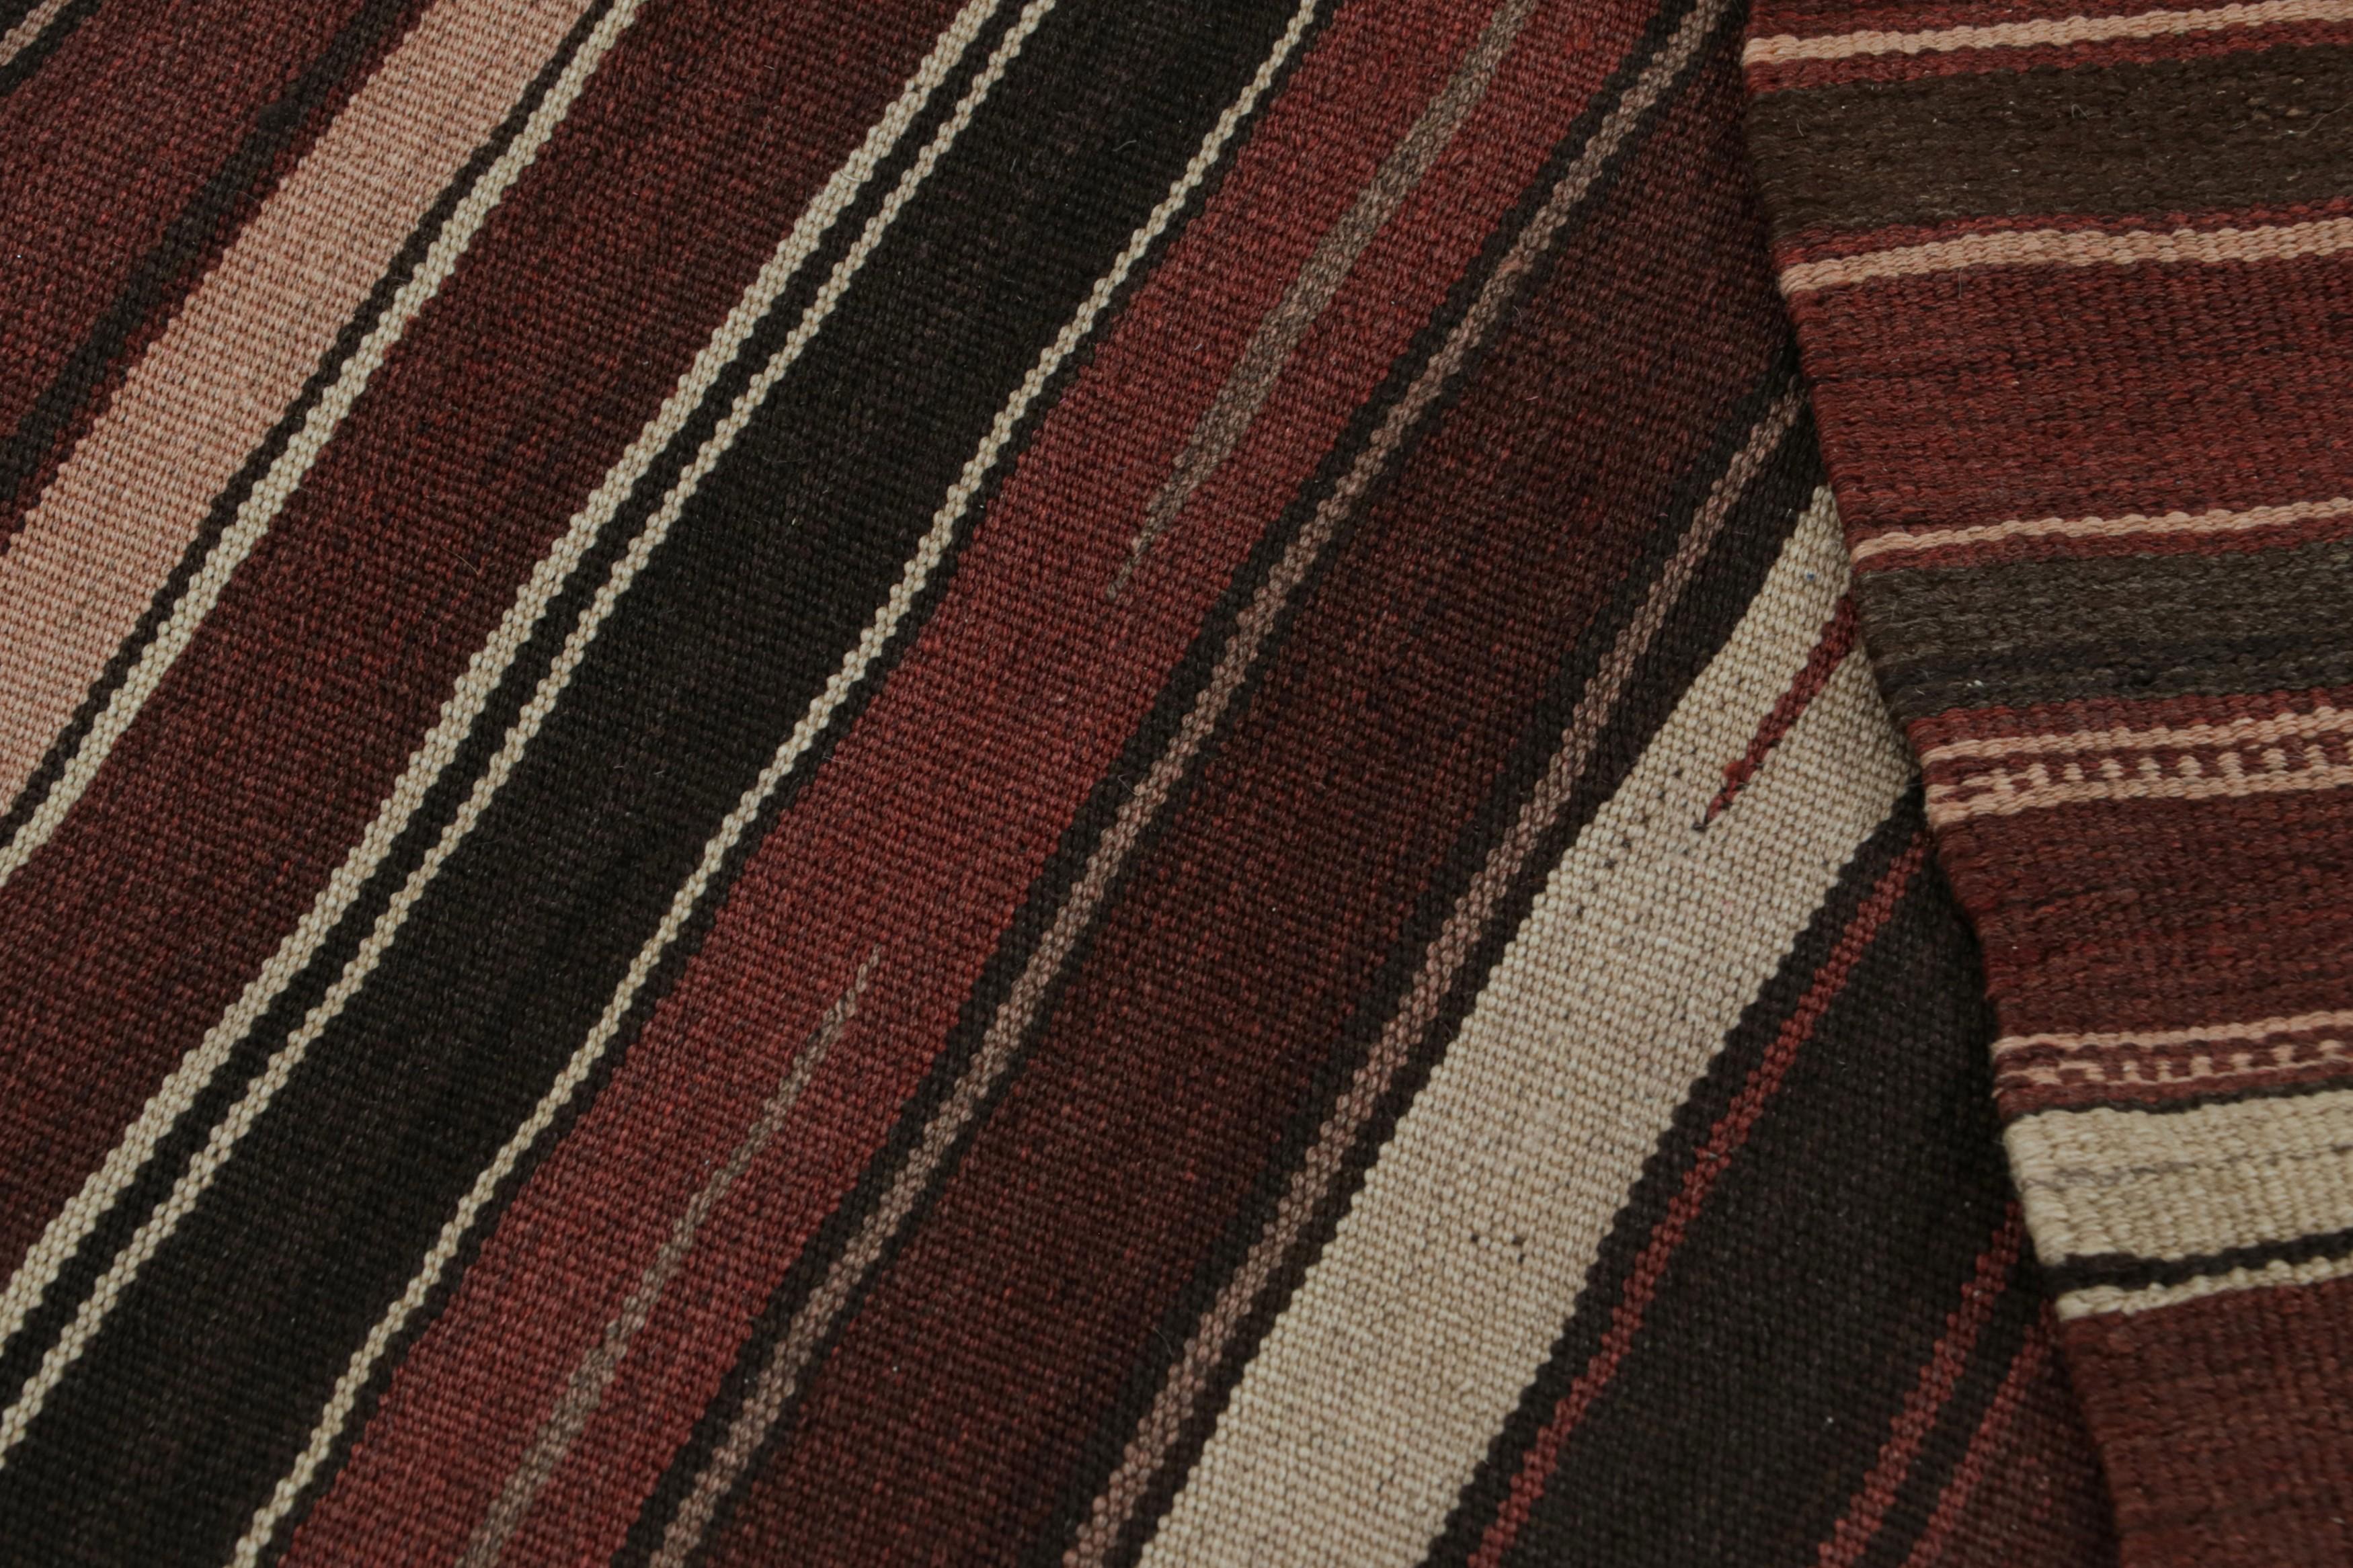 Vintage Afghan Tribal Kilim with Red, Black & White Stripes by Rug & Kilim For Sale 1